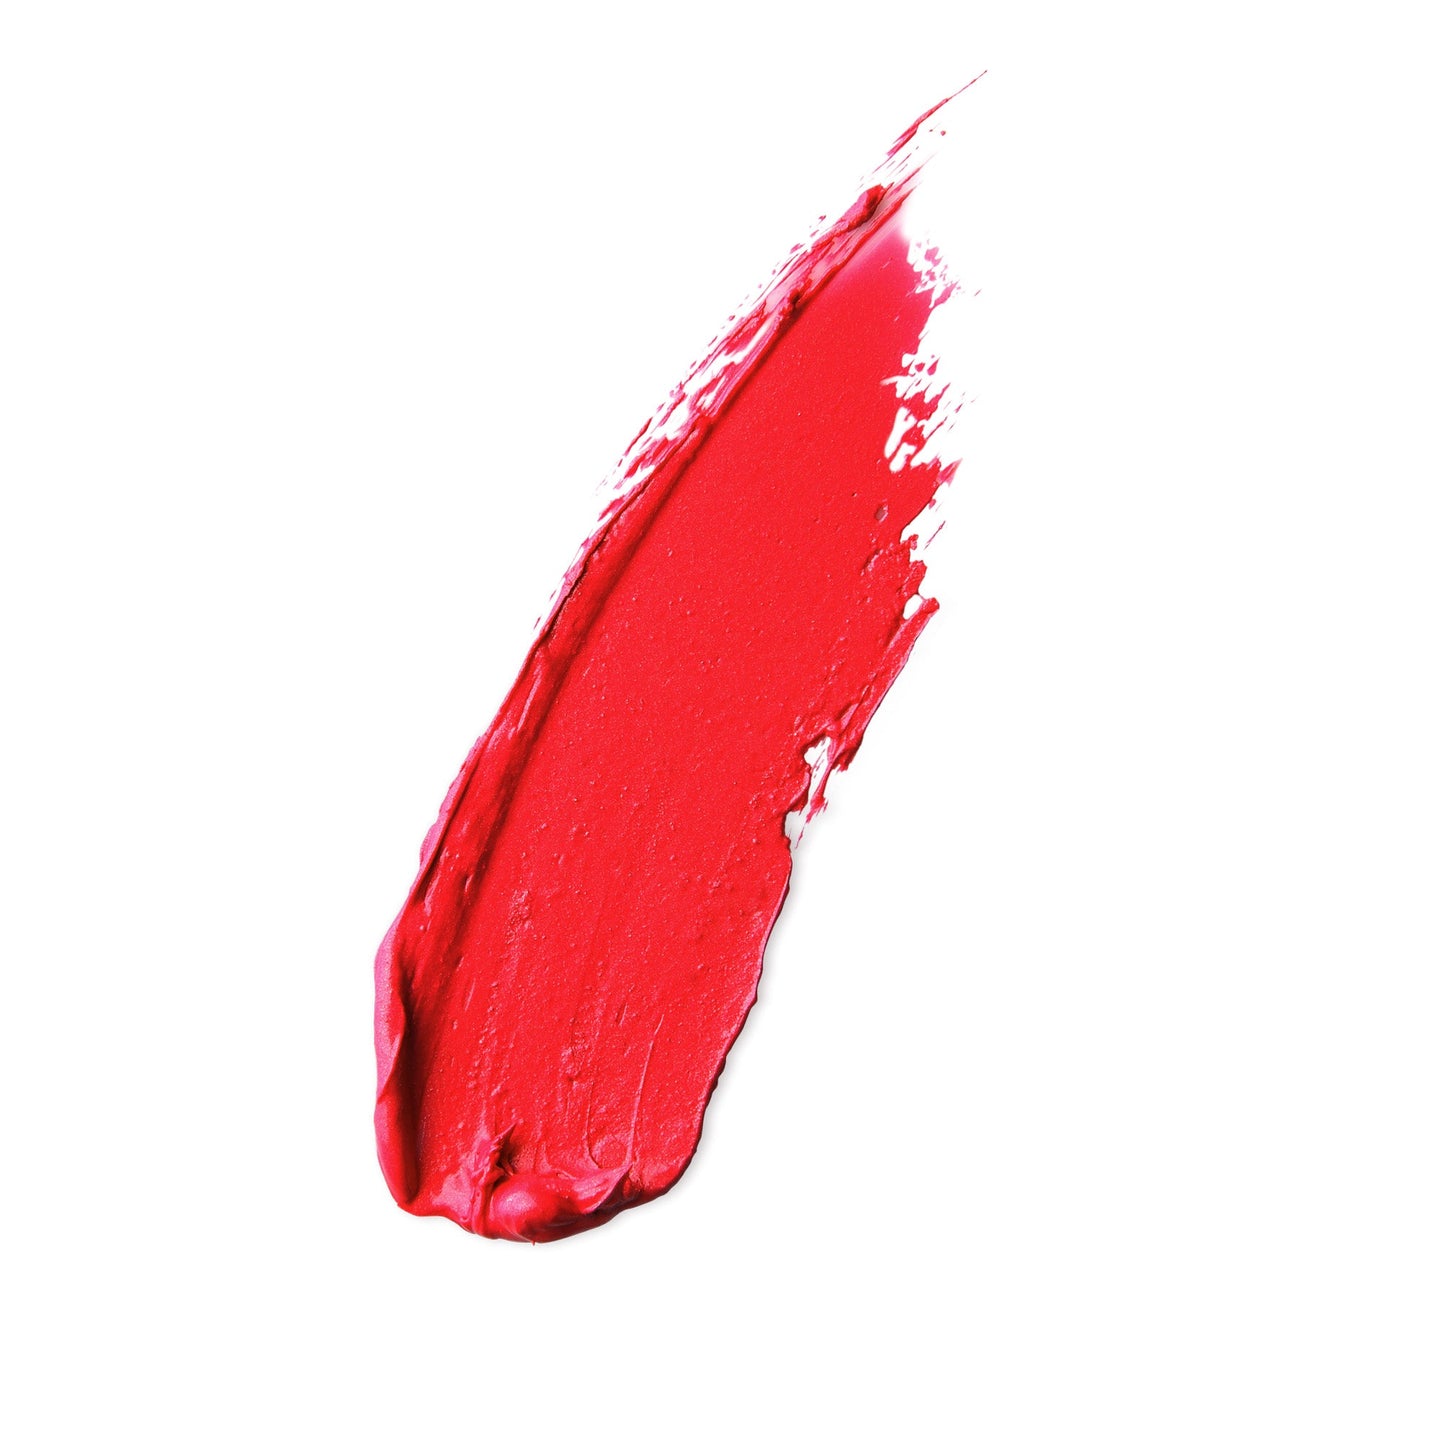 Forest Berry Red Moisture-Boost Natural Lipstick 4g - Antipodes Australia